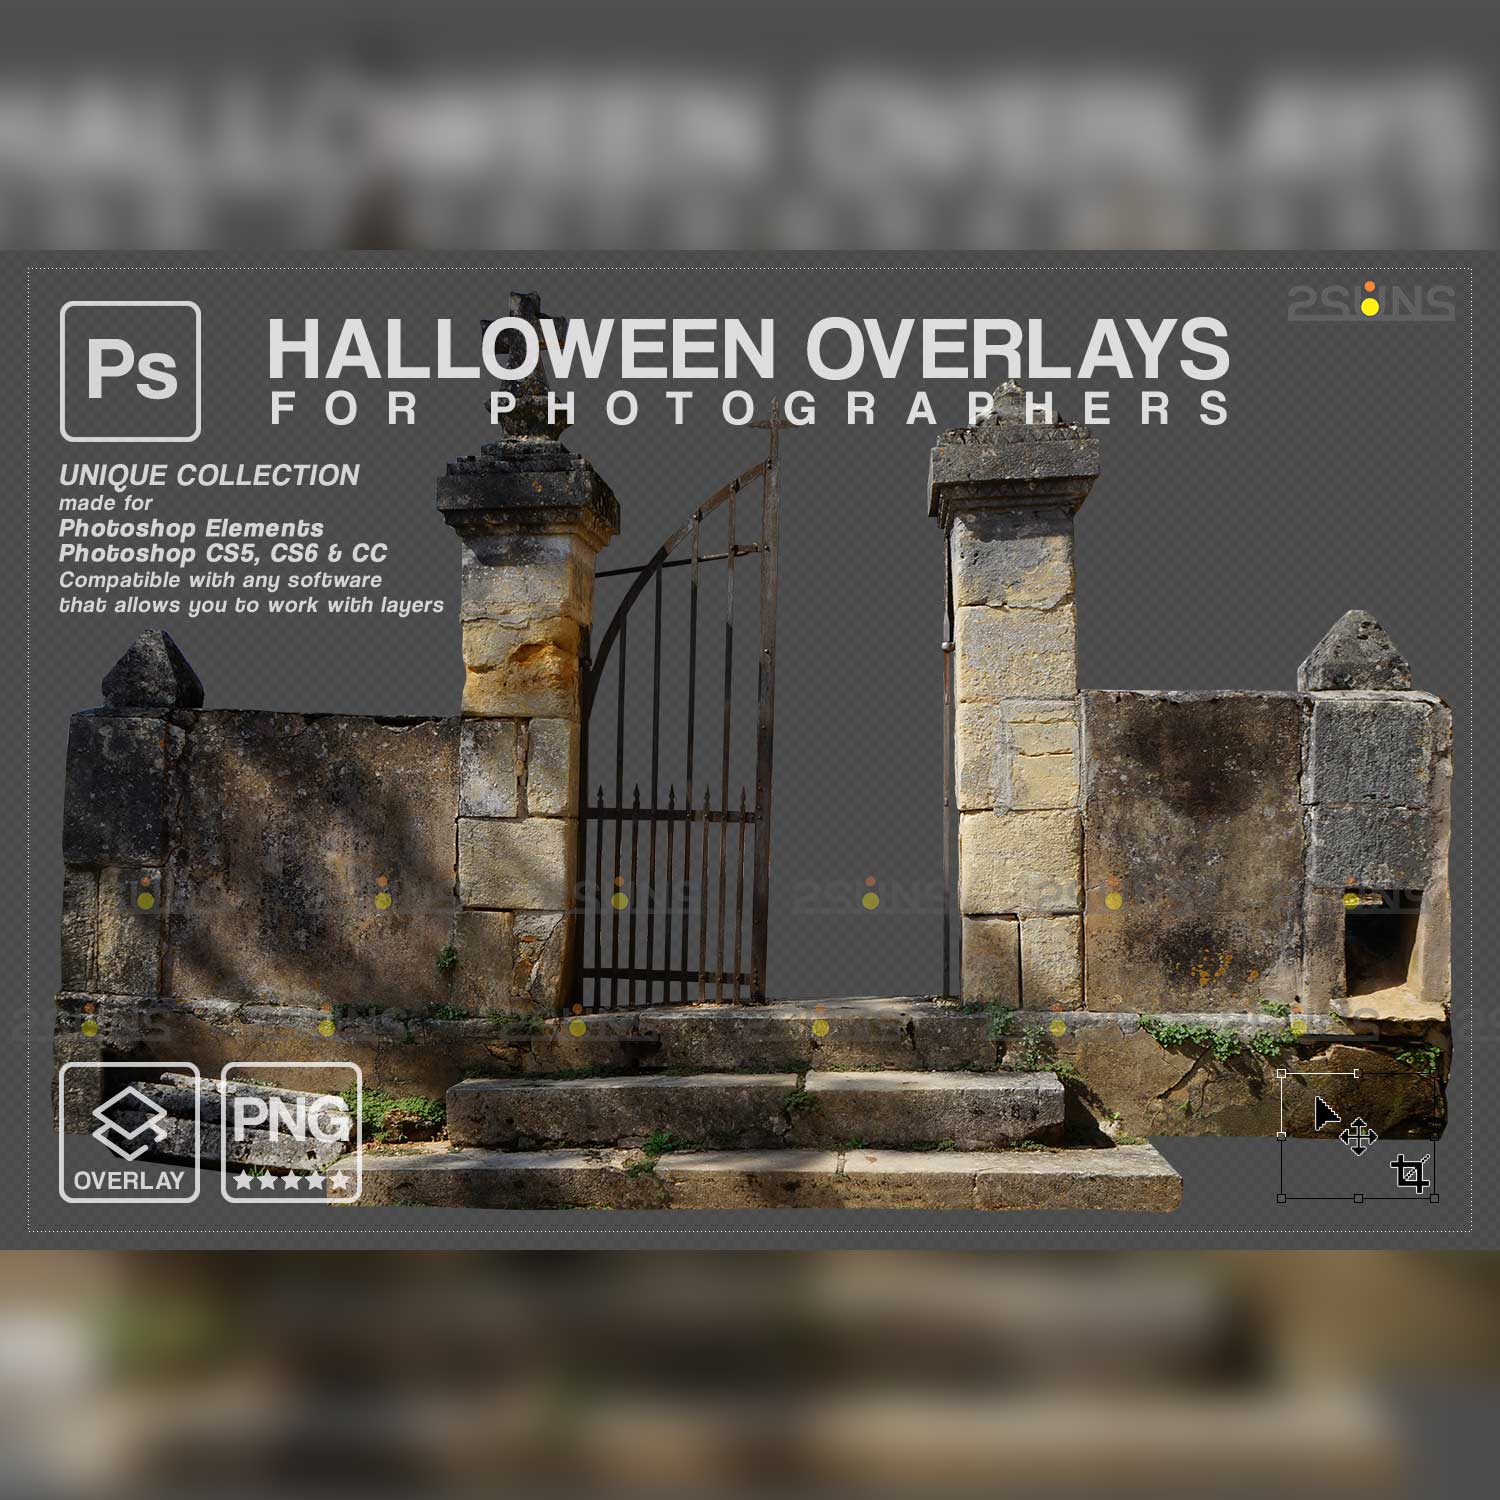 Halloween Photoshop Halloween Overlays cover image.